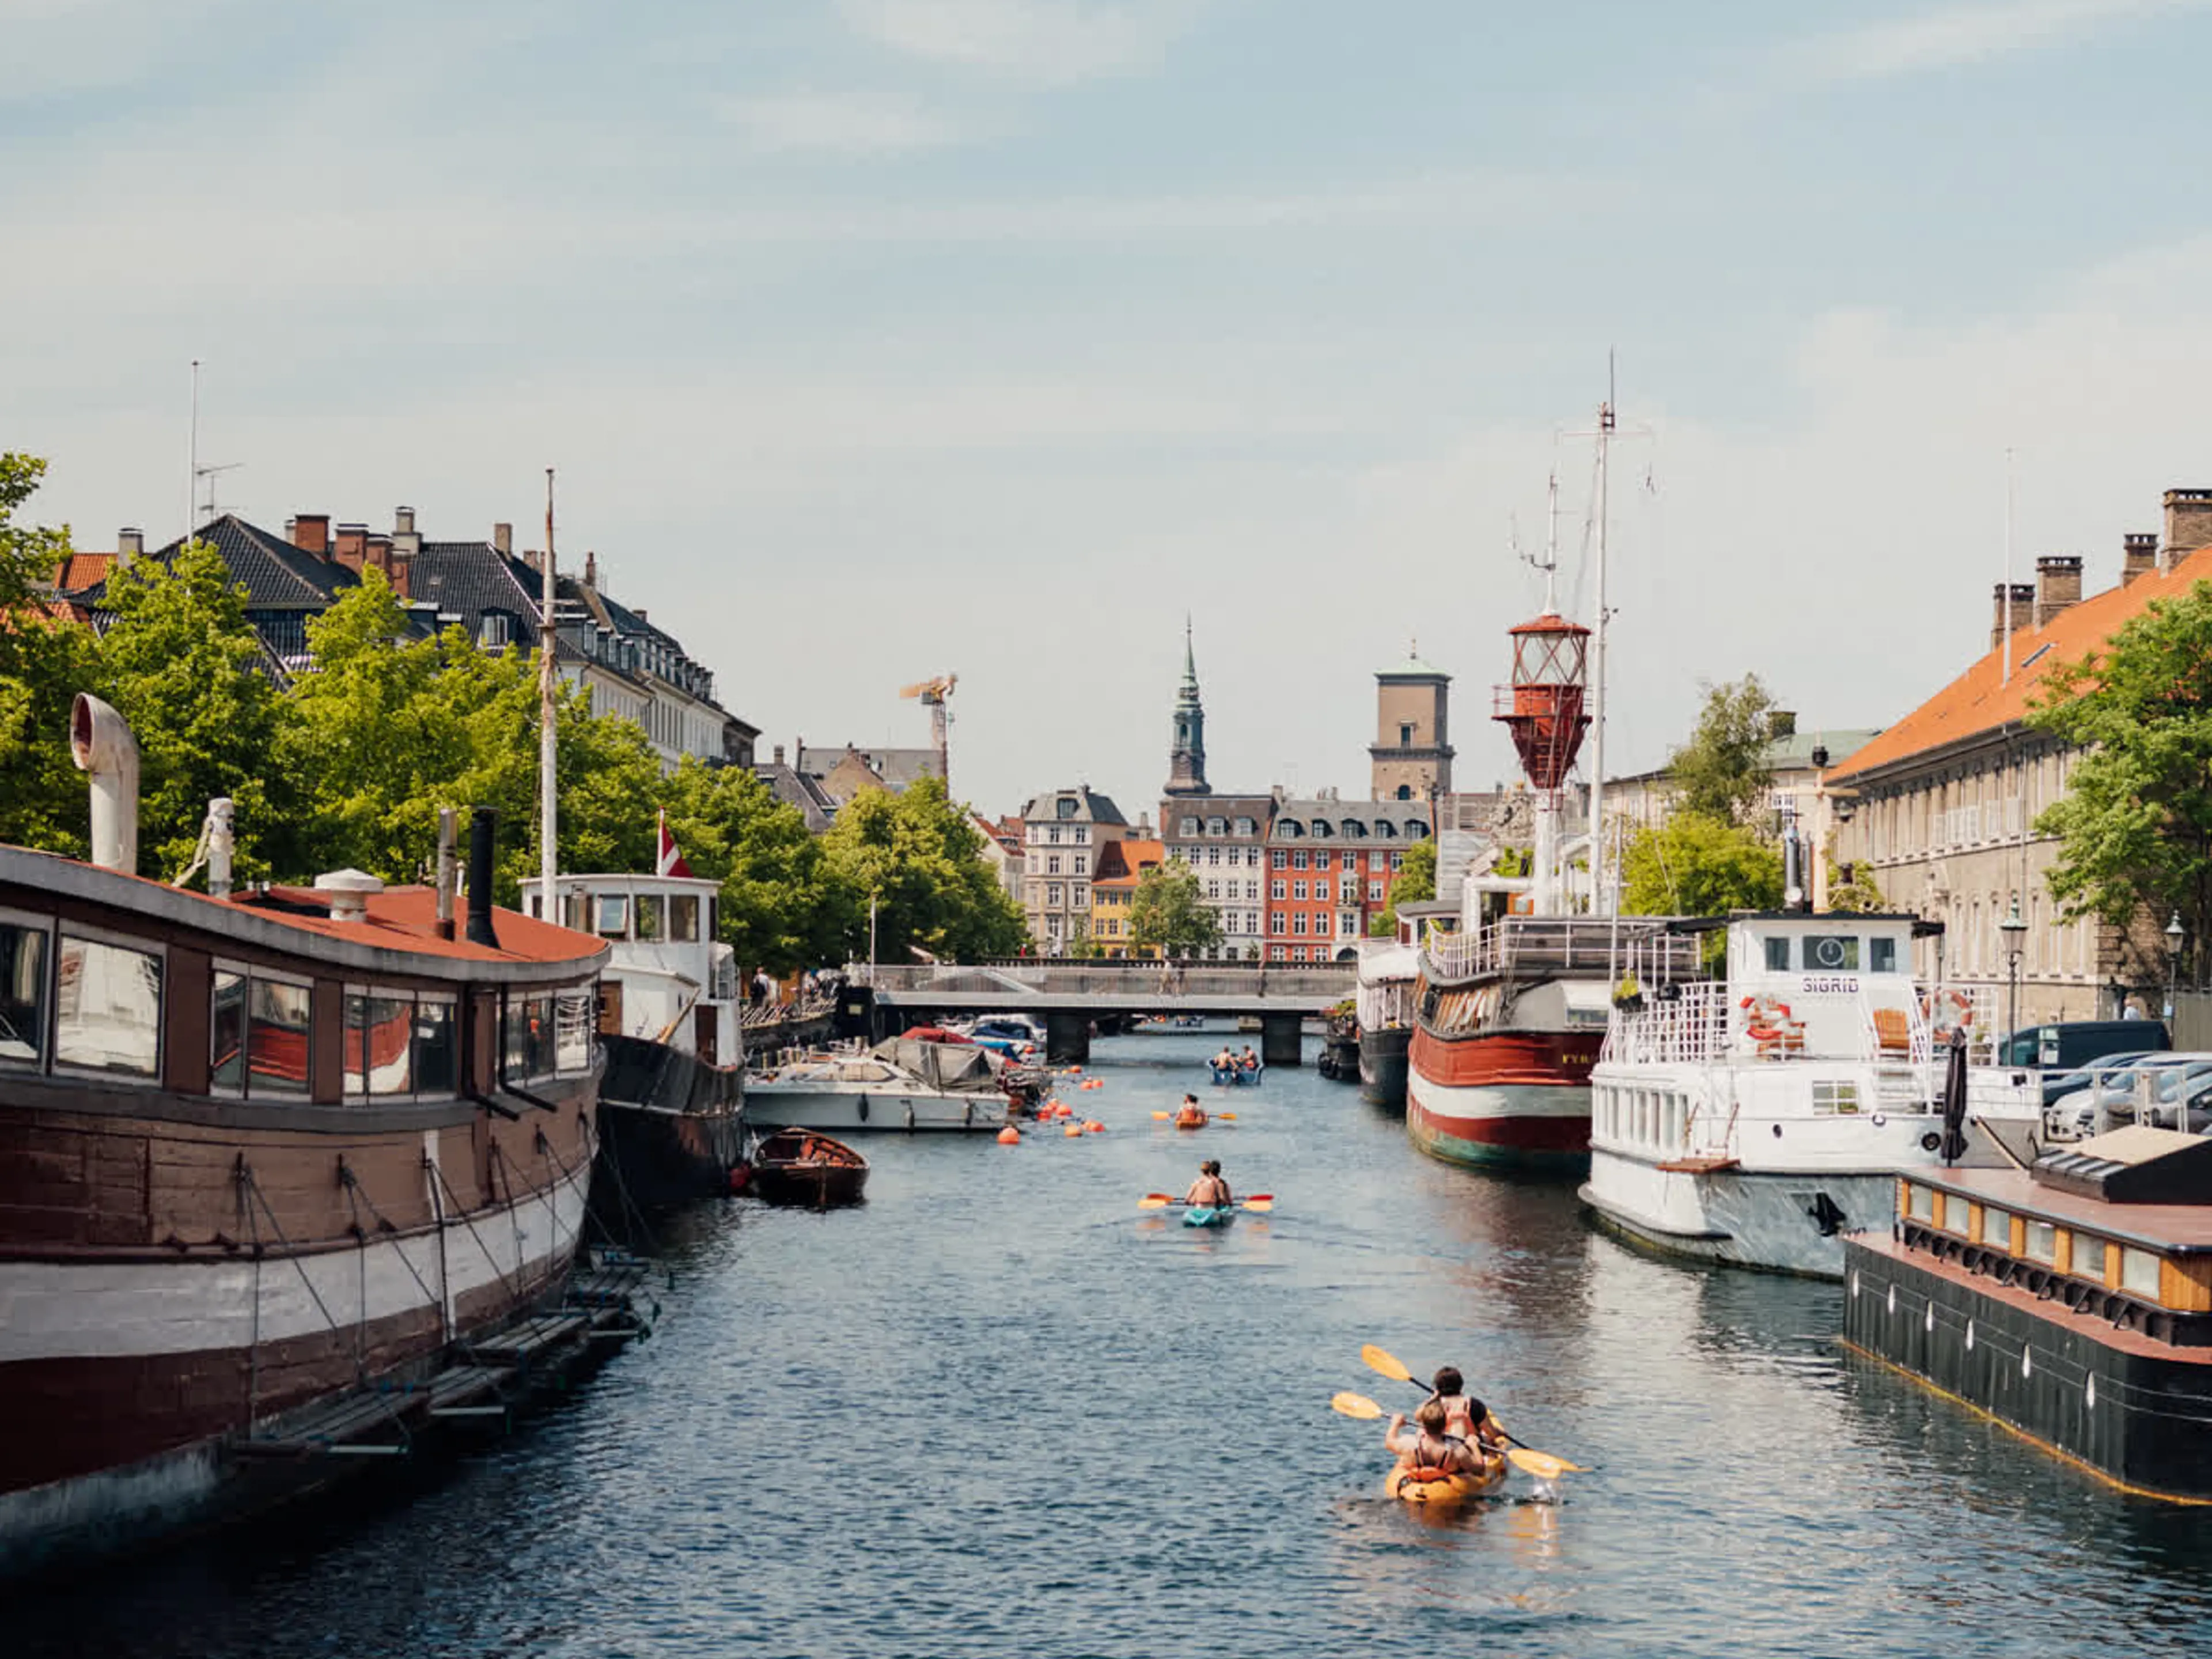 People kayaking on the canals of Copenhagen in summer